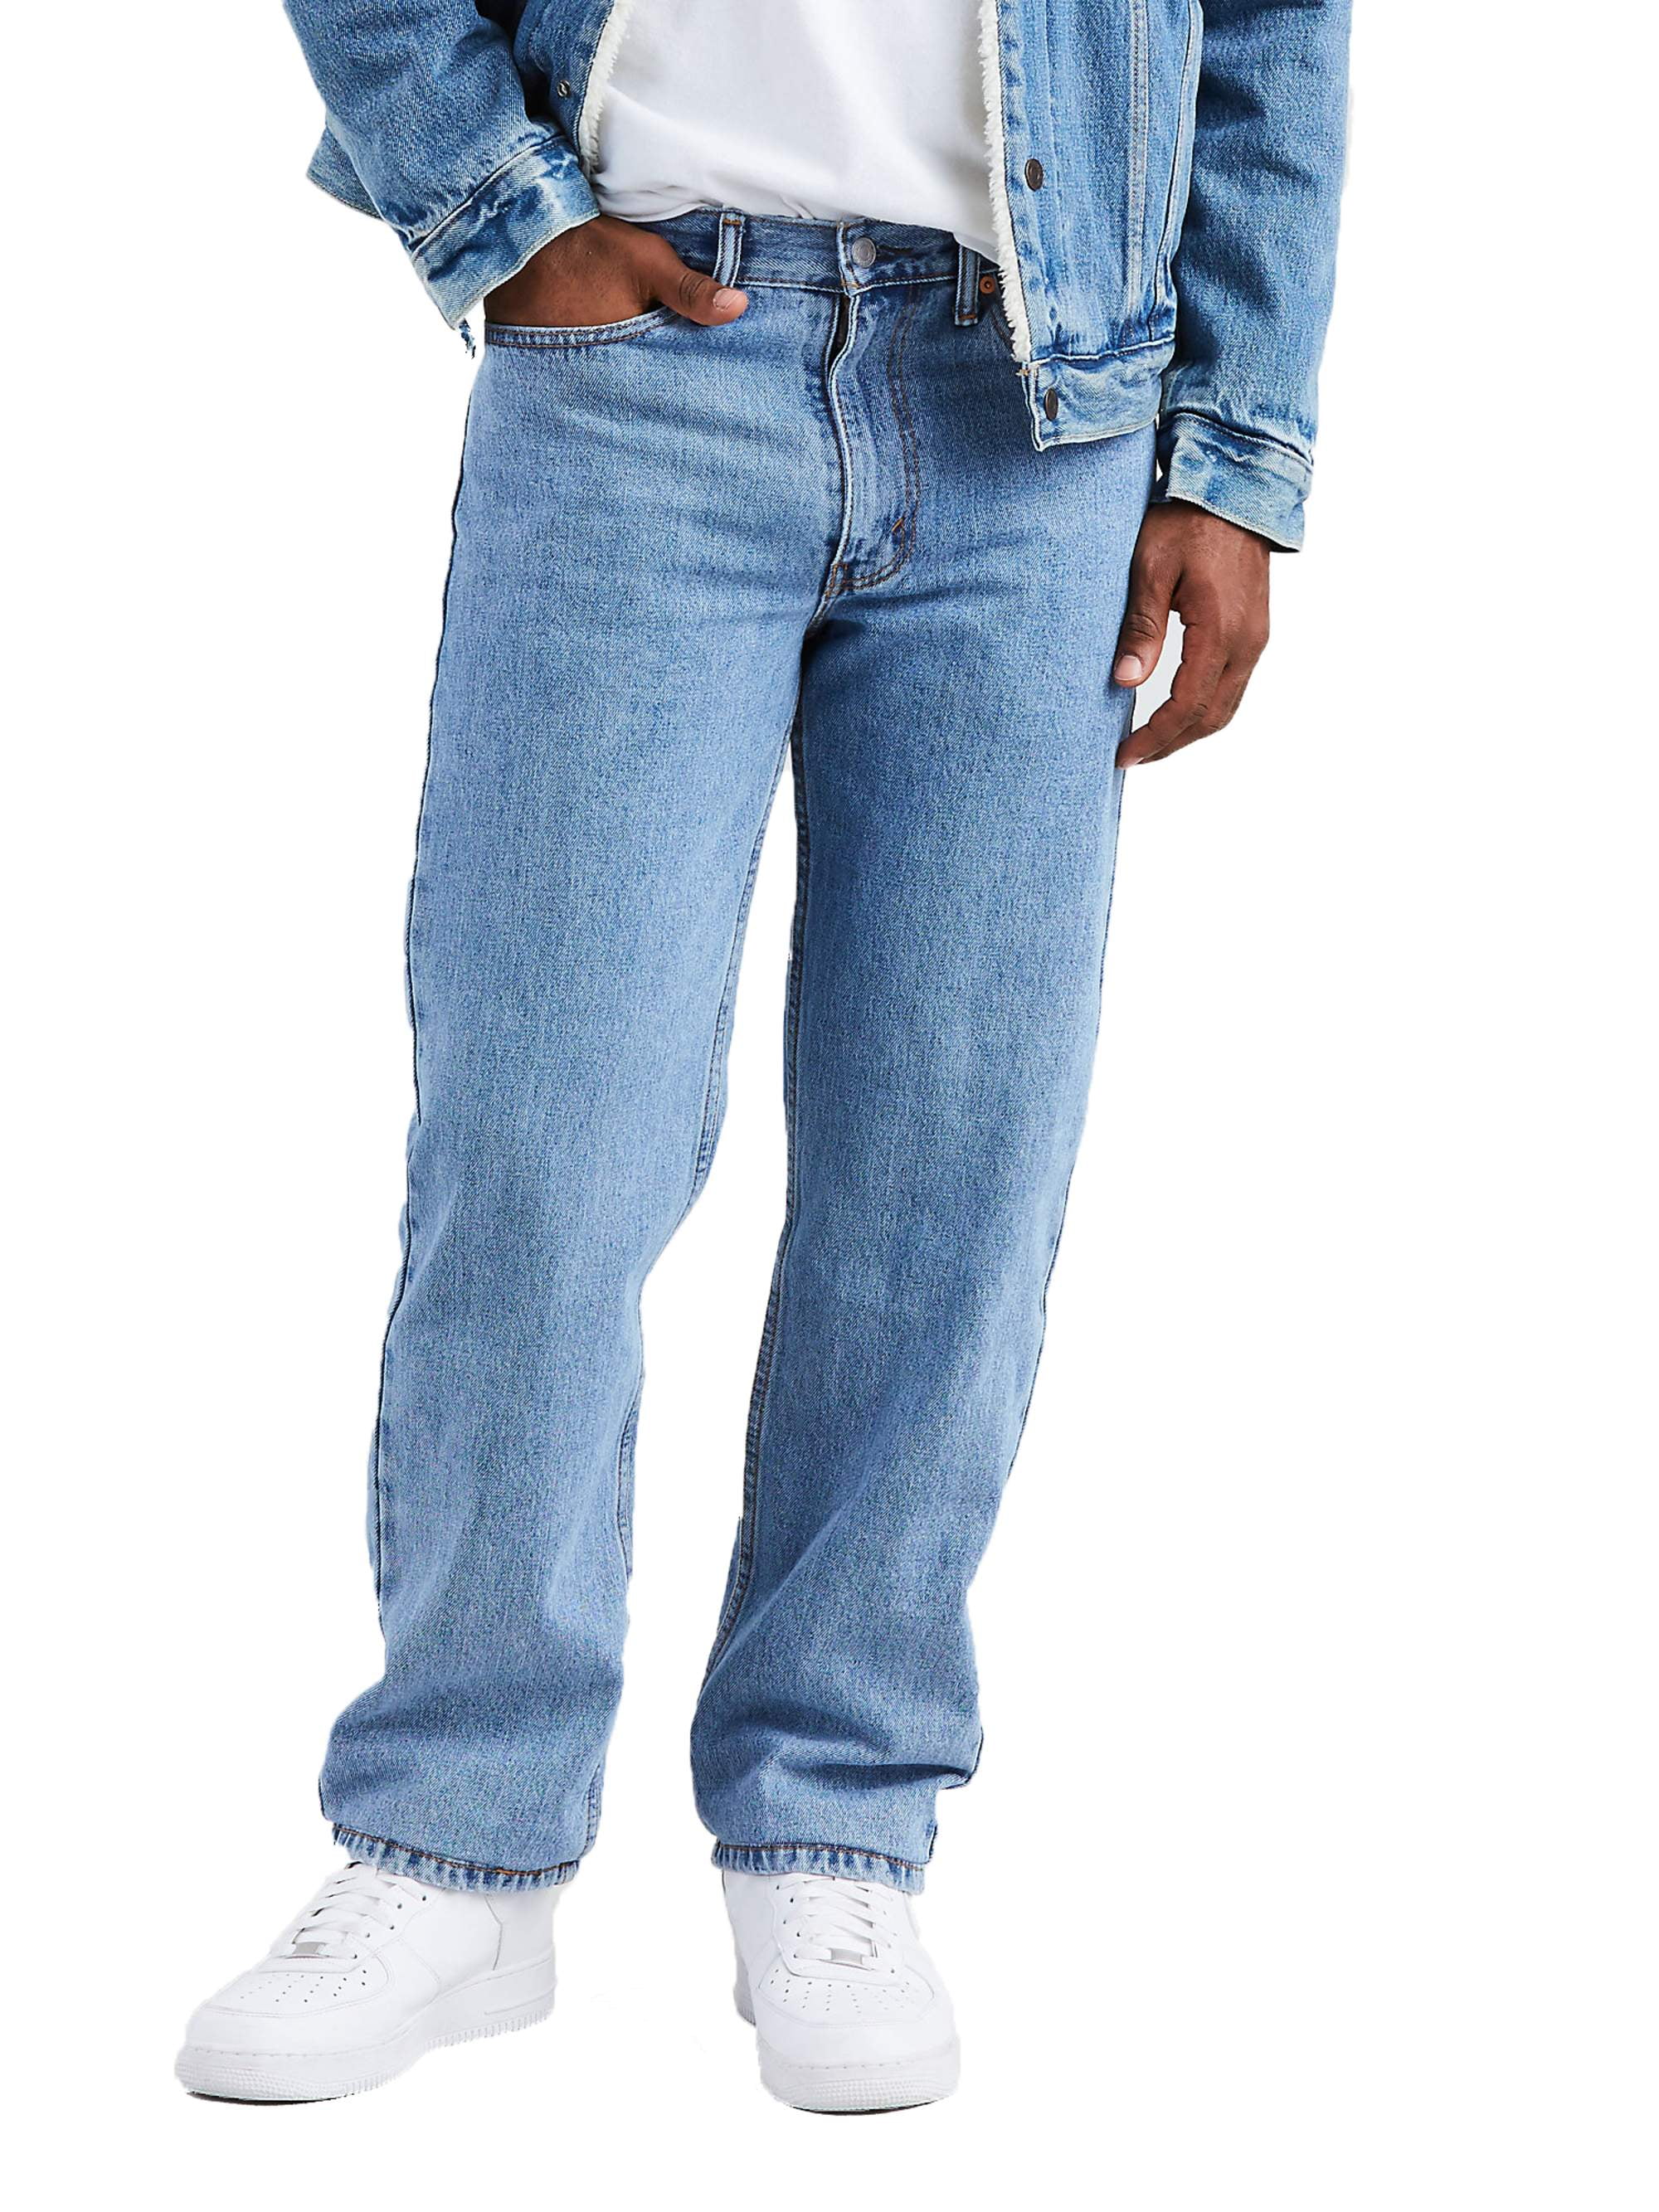 Men's Levi's 550 Relaxed Jeans 100% Cotton 005500032 